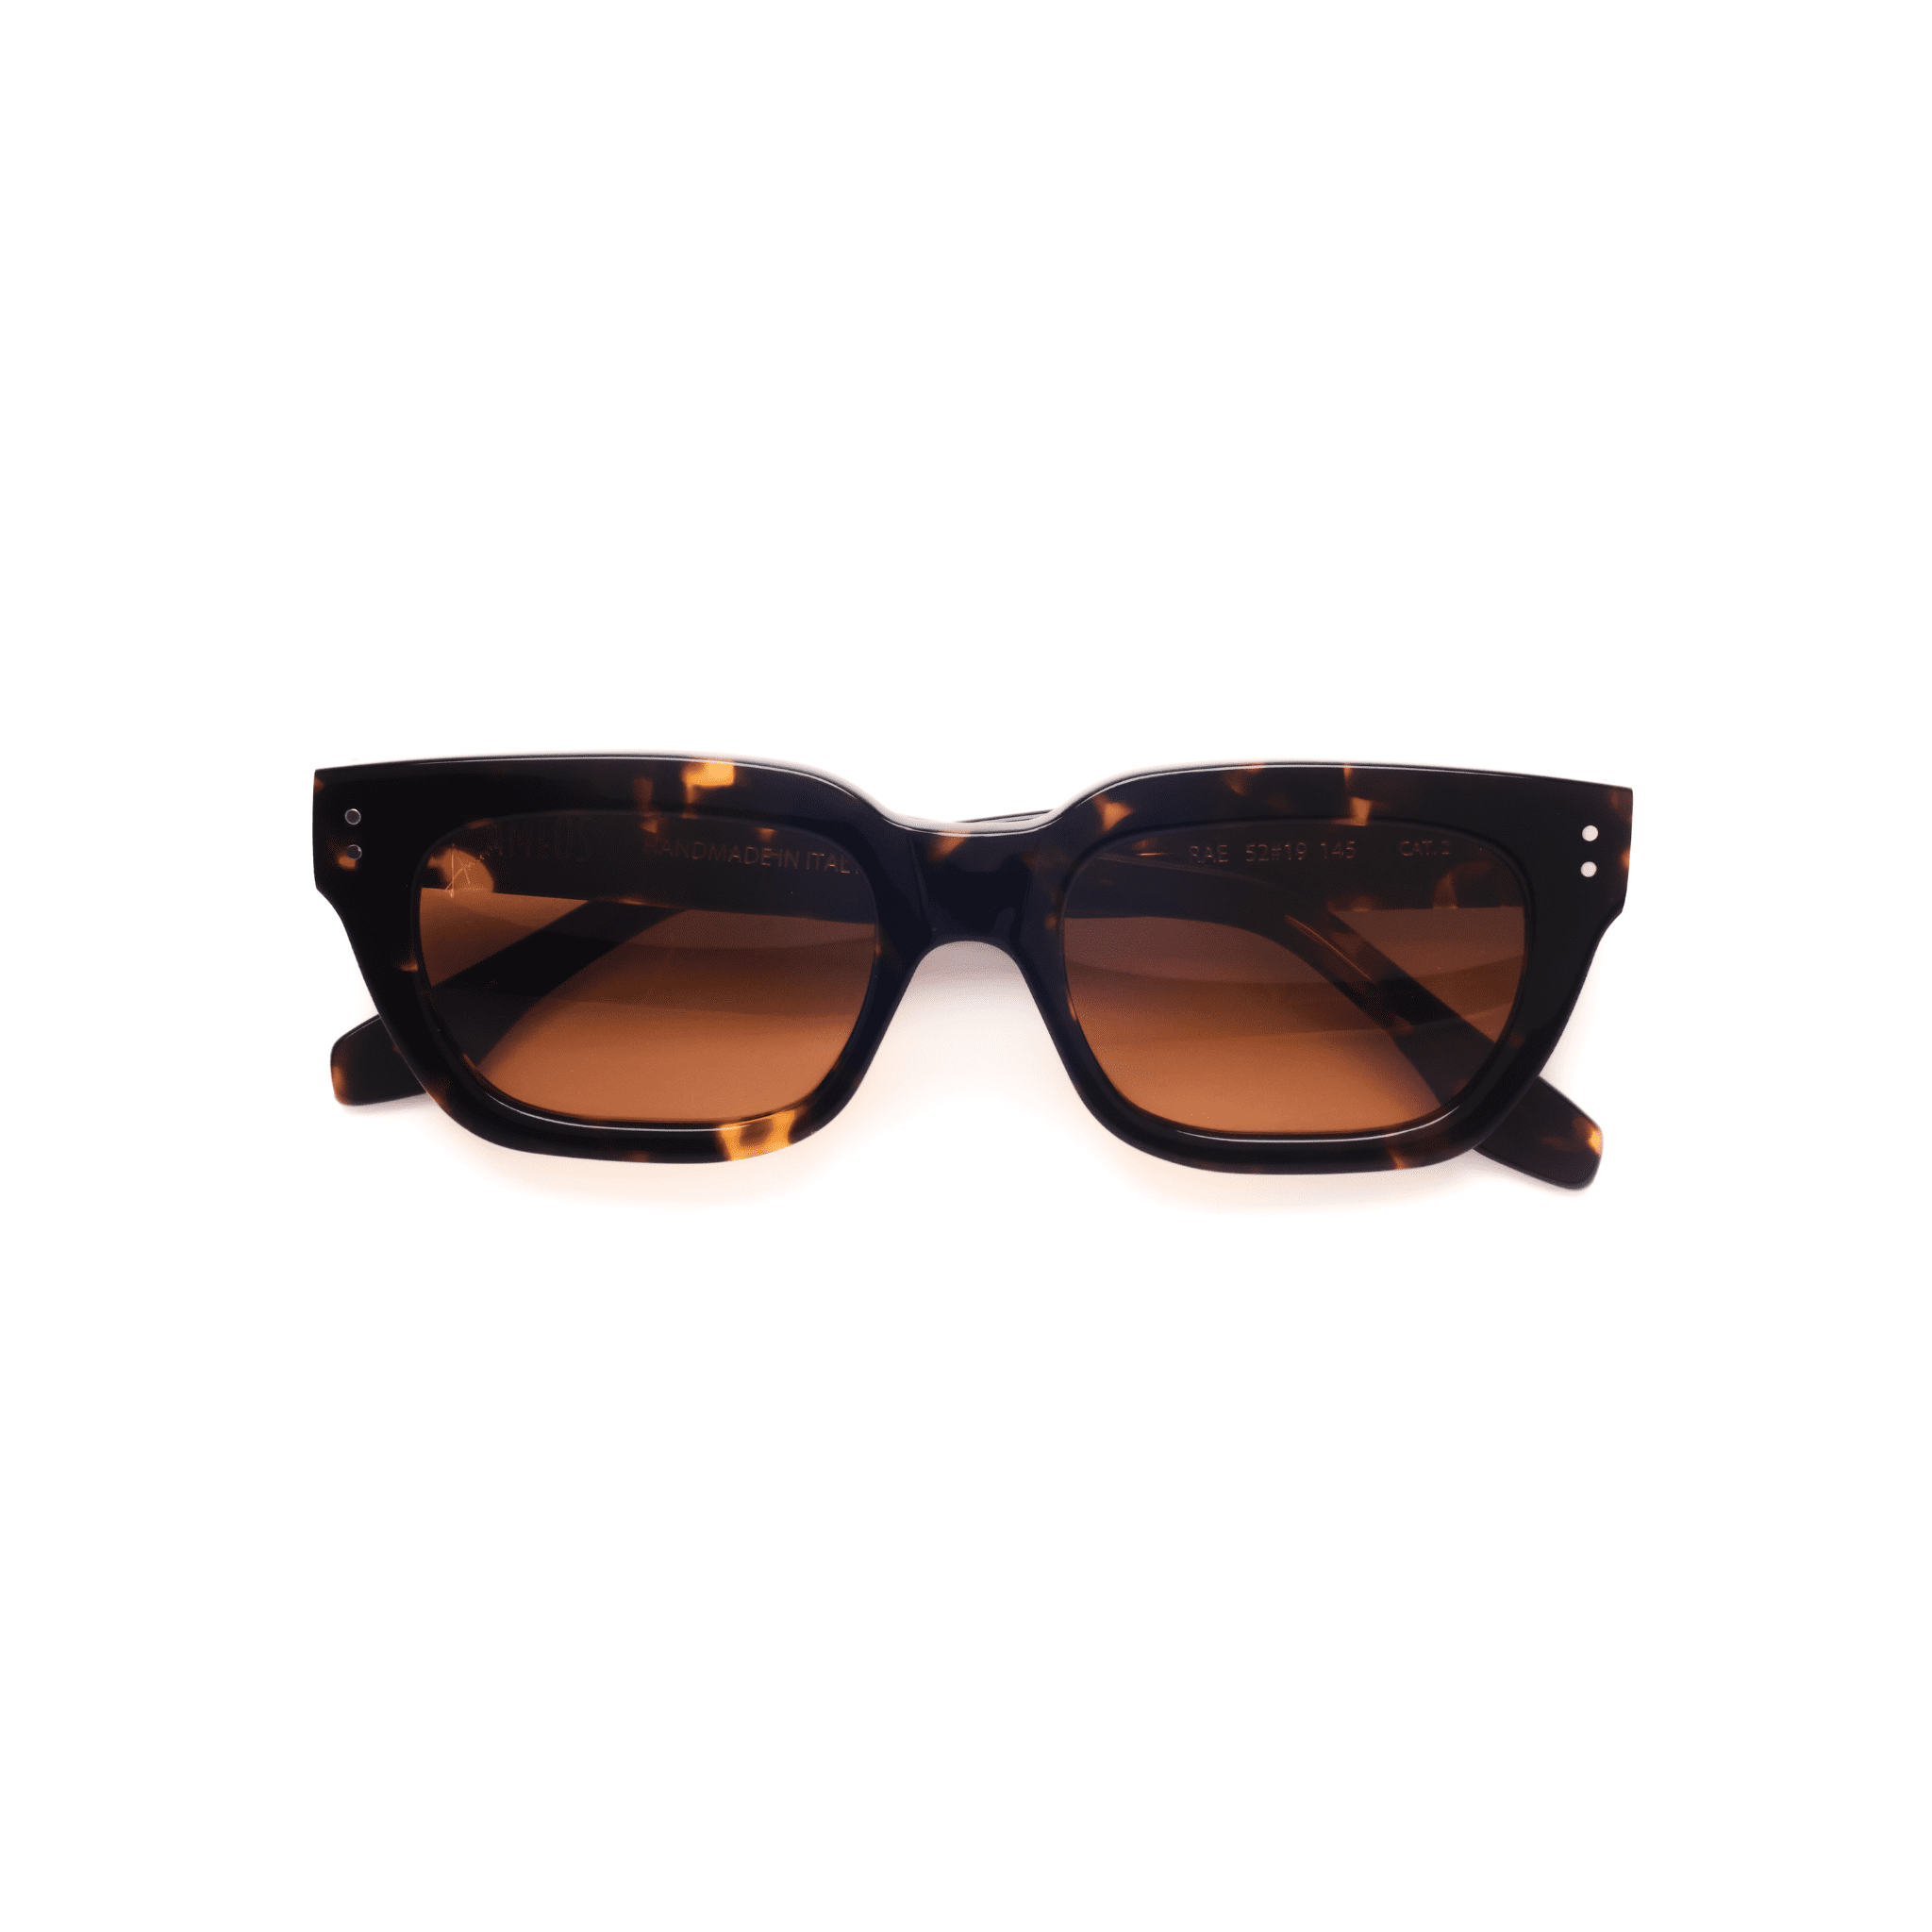 Ameos Forever collection Rae model. Tortoise frames with dark orange lenses. Front view temples crossed. Genderless, gender neutral eyewear